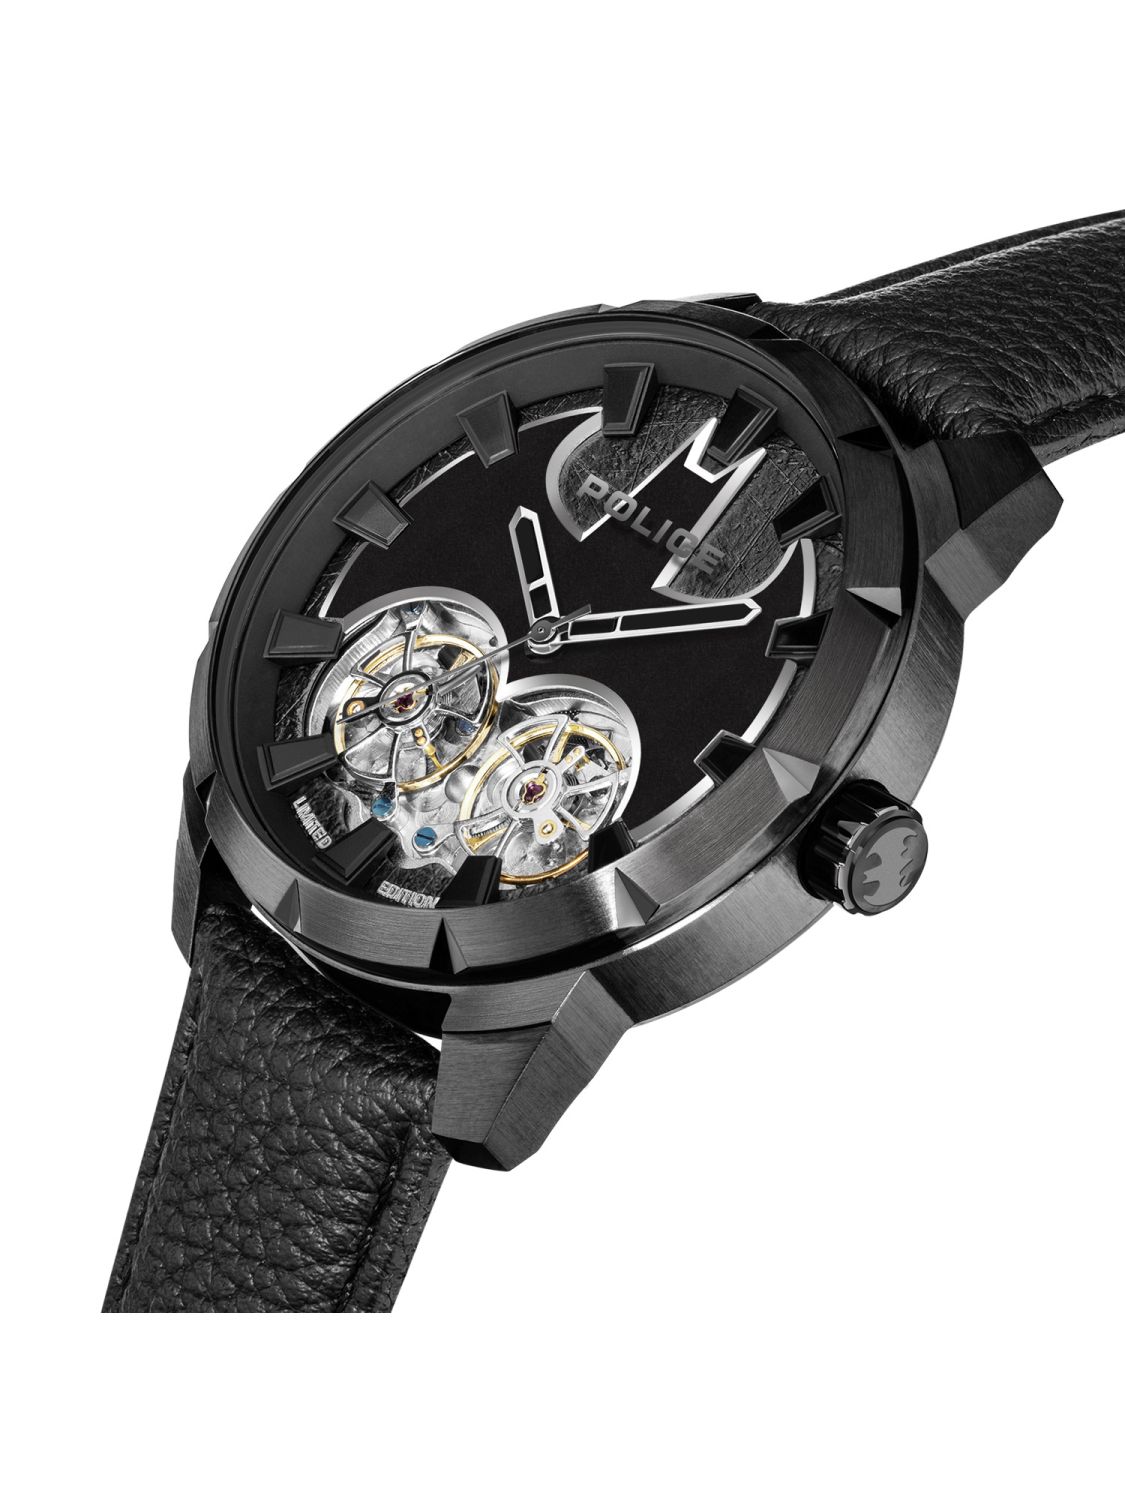 Police Wristwatch Automatic Batman Limited uhrcenter PEWGE0022701 • Black Edition